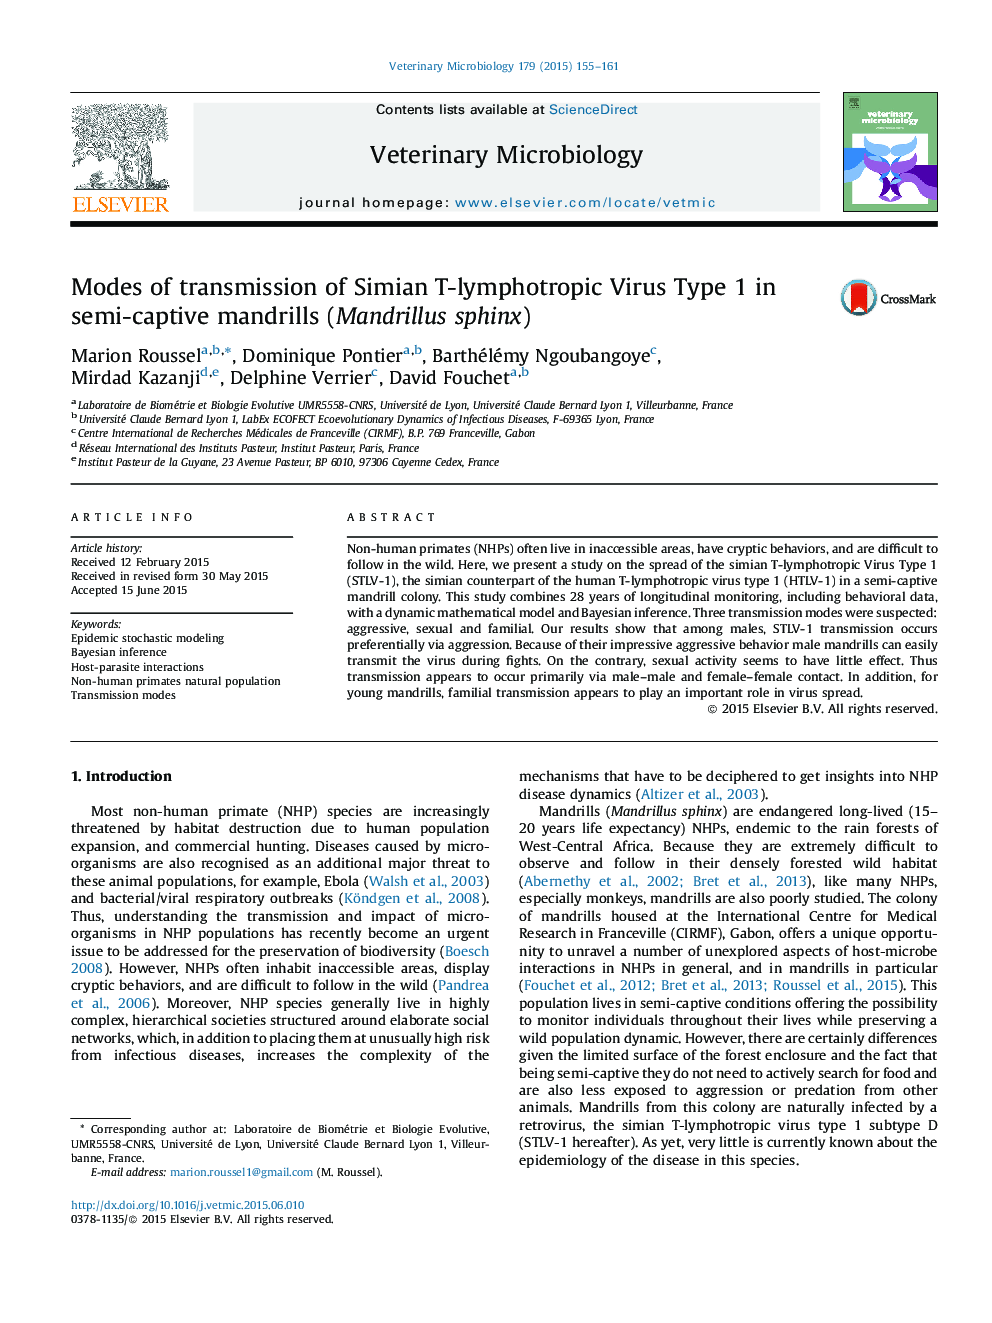 Modes of transmission of Simian T-lymphotropic Virus Type 1 in semi-captive mandrills (Mandrillus sphinx)